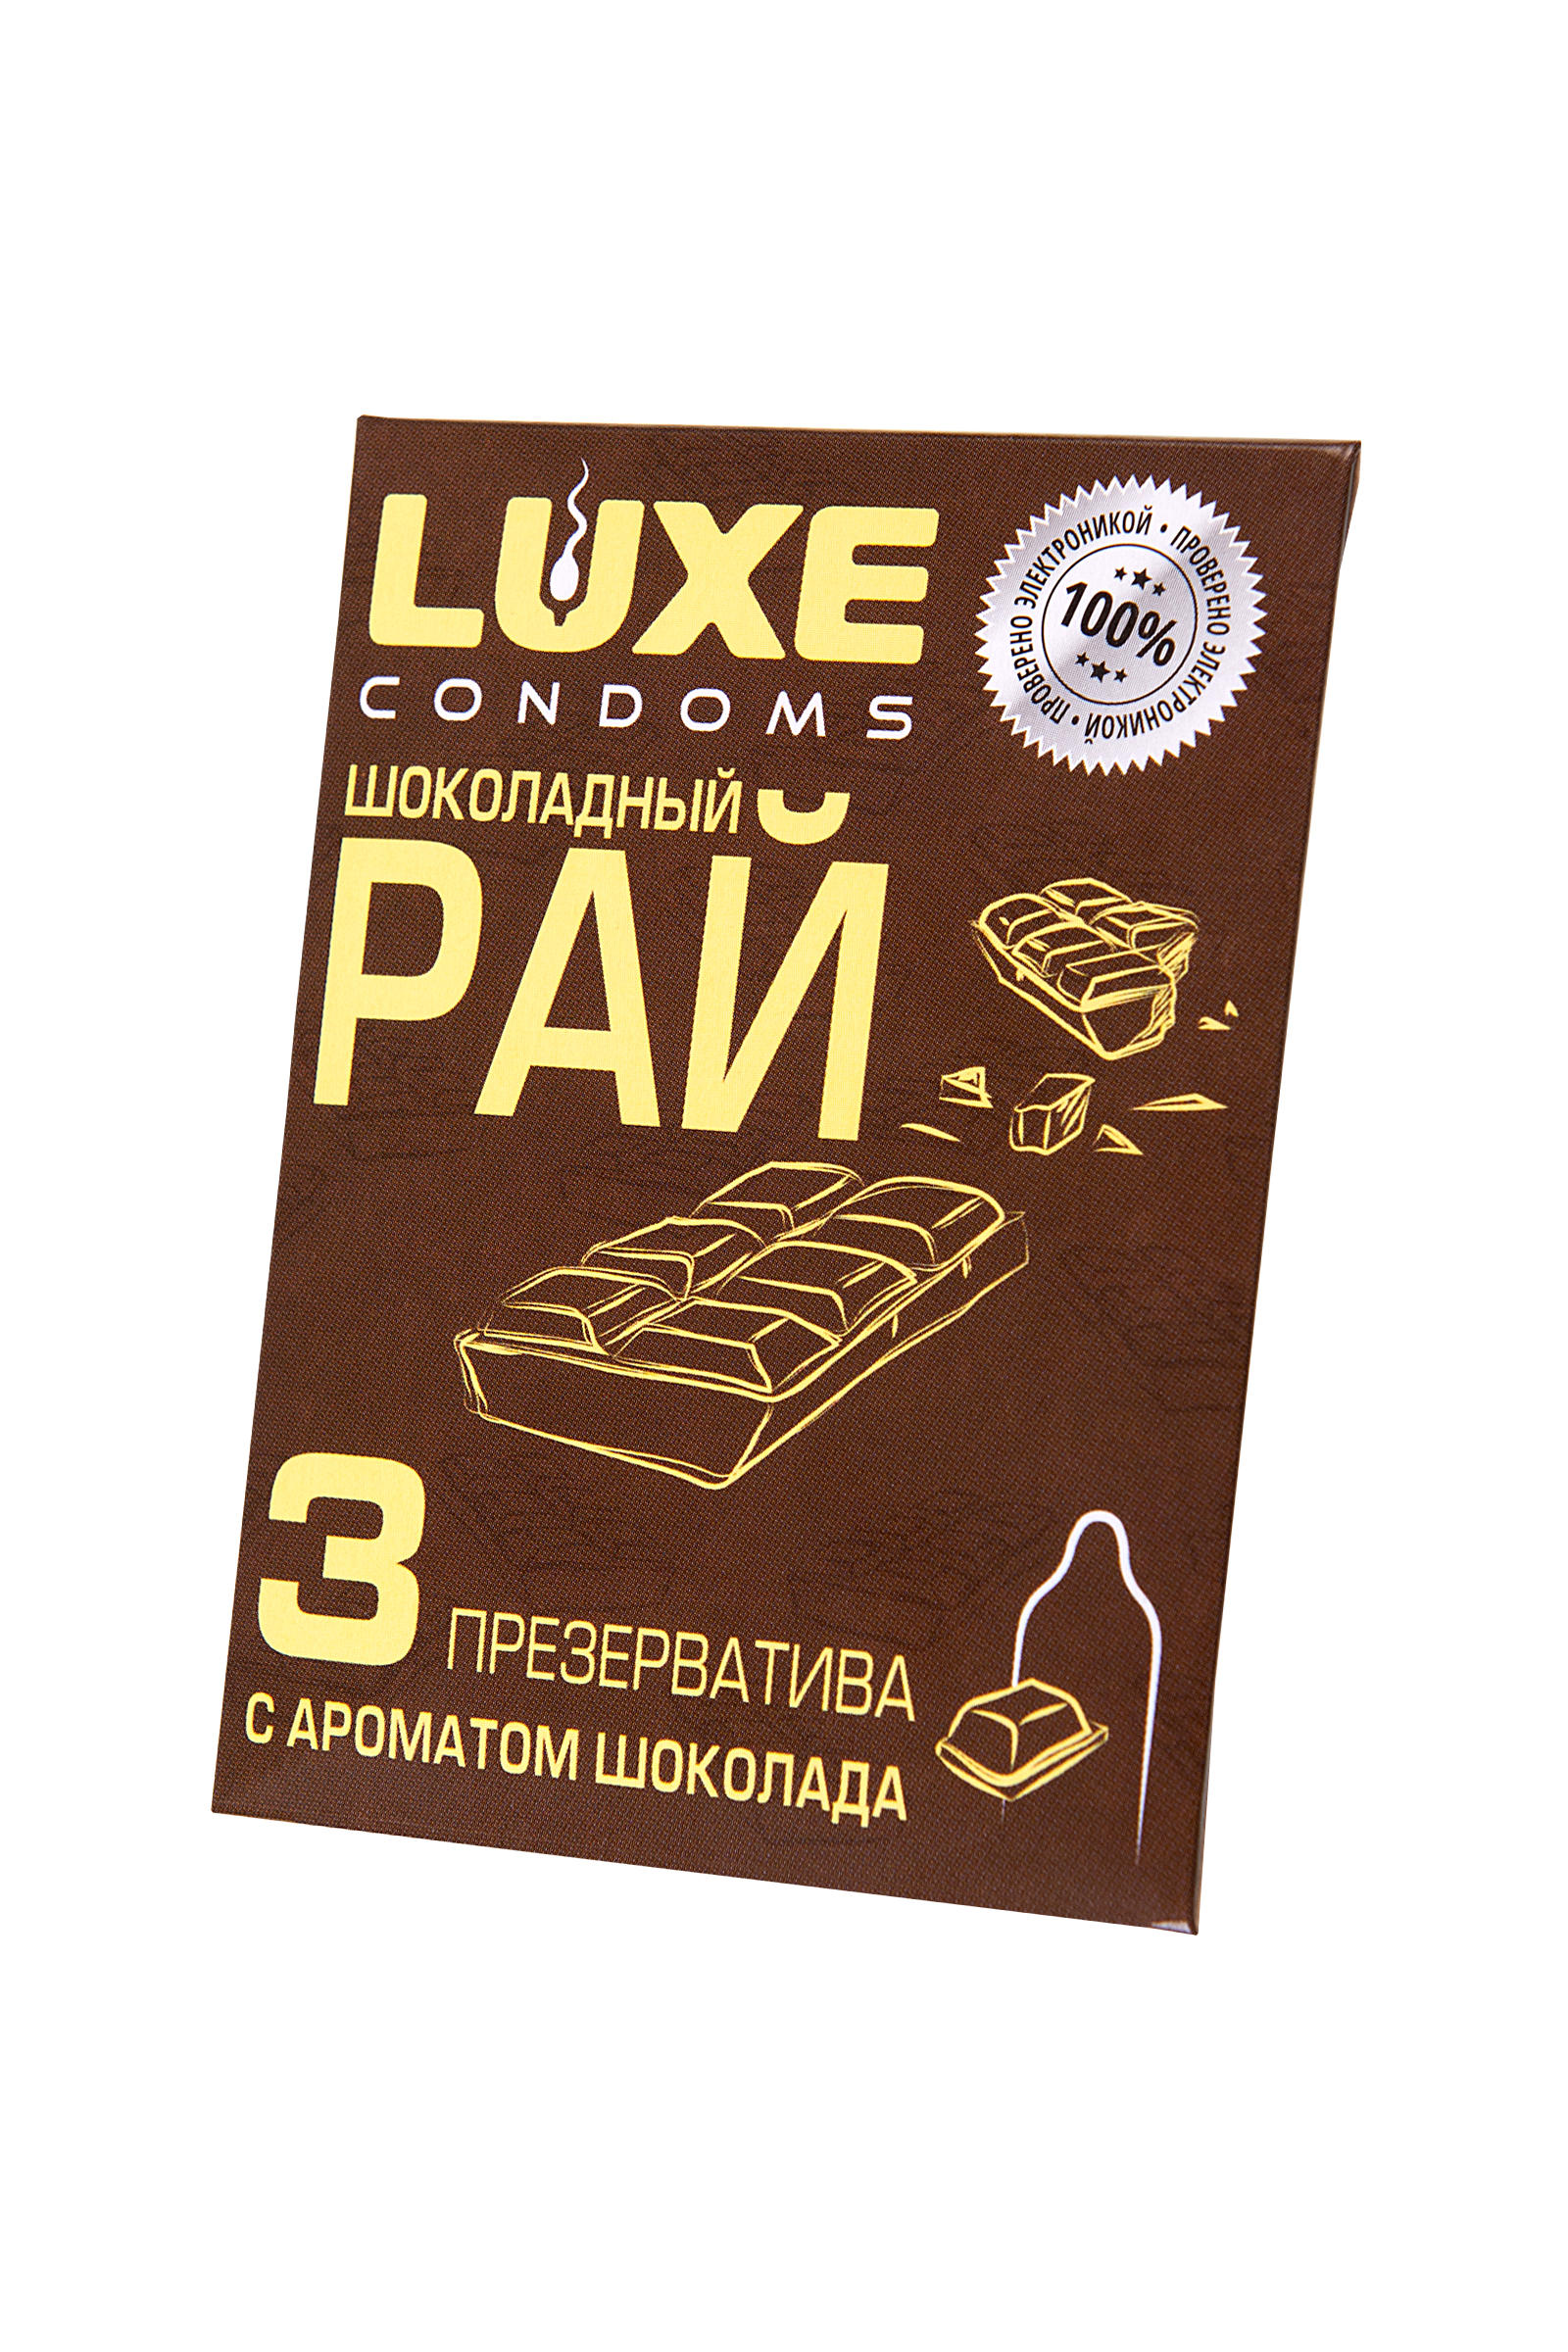 Презервативы Luxe, конверт «Шоколадный рай», латекс, шоколад, 18 см, 5,2 см, 3 шт. фото 1. Фото N2